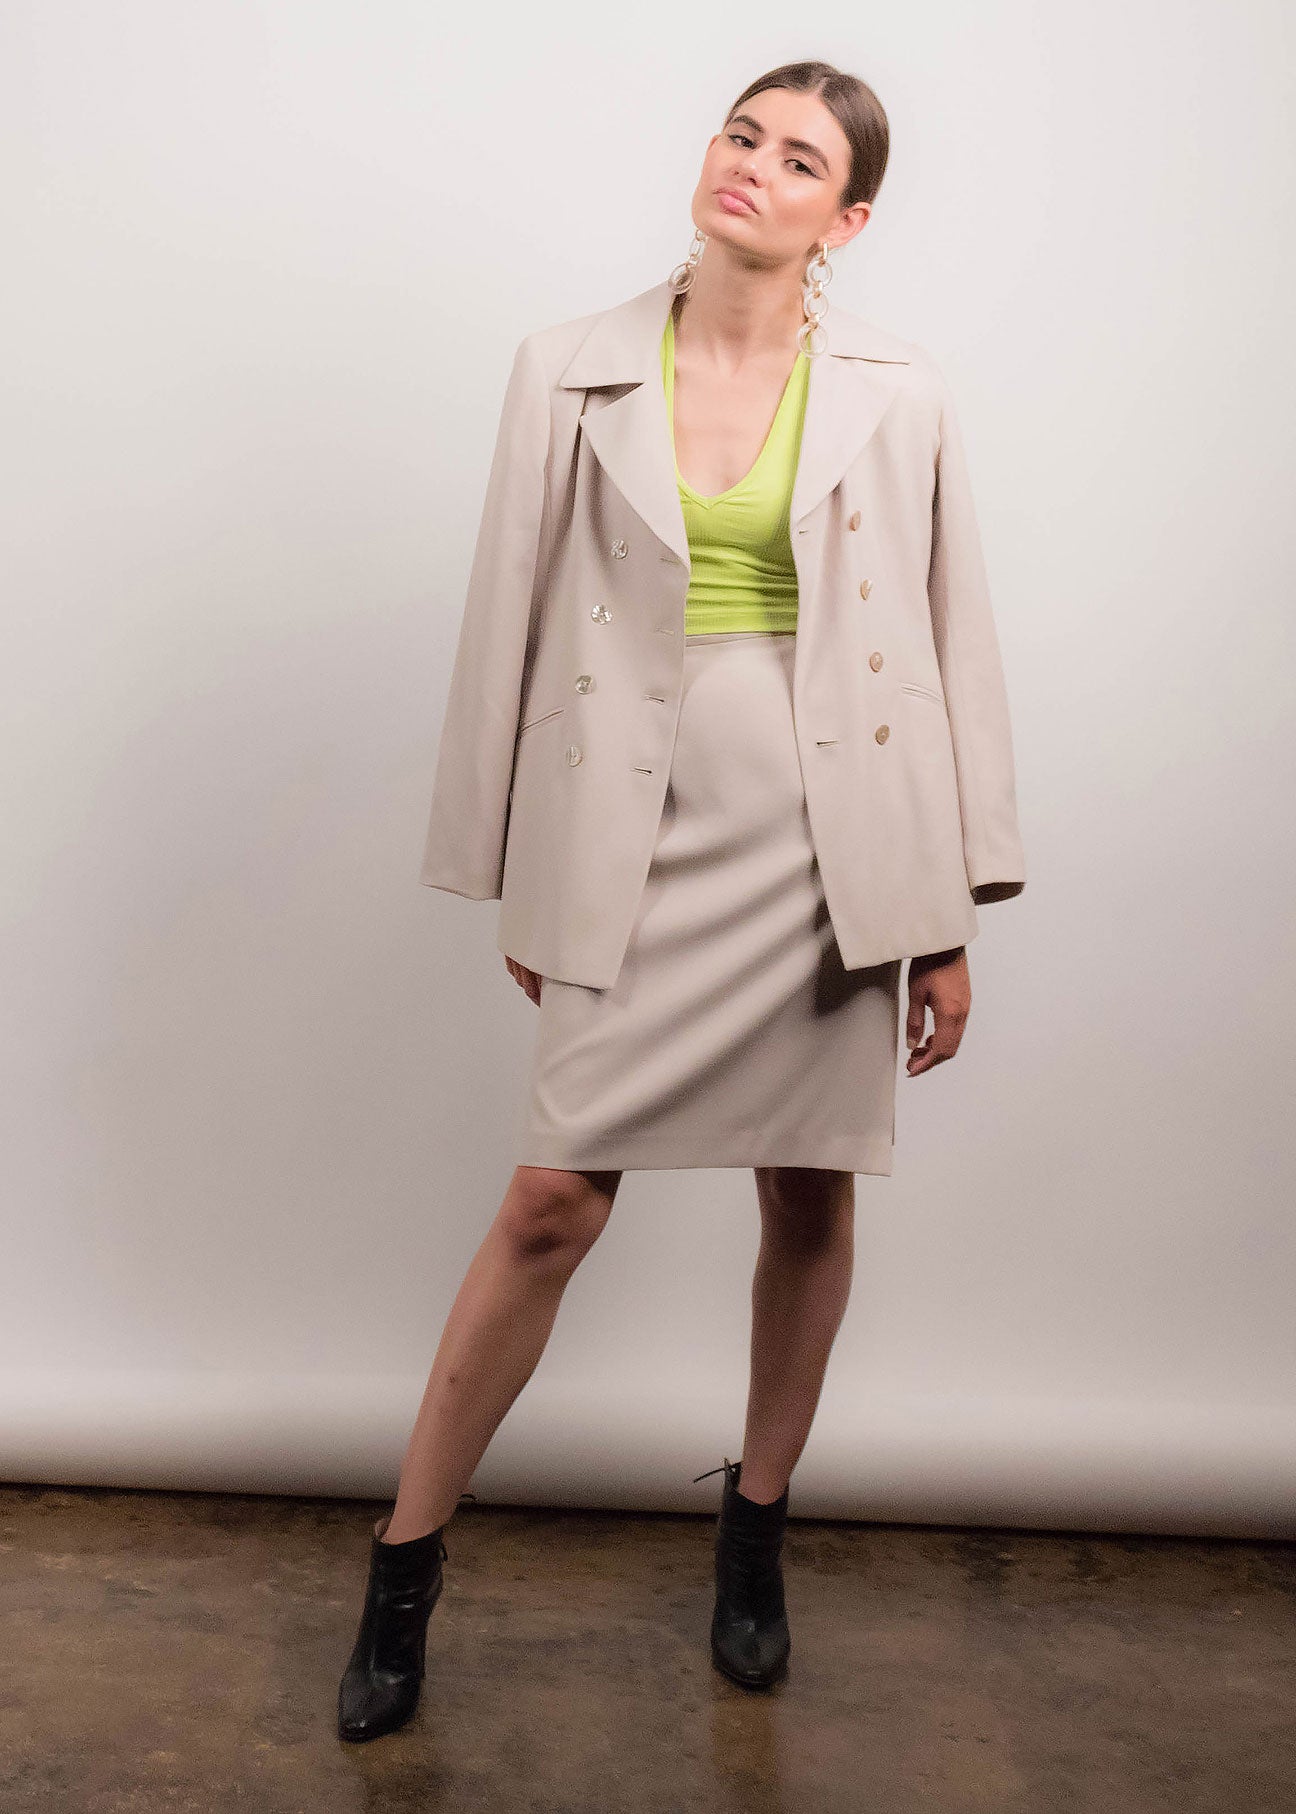 Yasmeen Ghauri, Suit and Tie. | Woman suit fashion, Fashion, Ralph lauren  suits